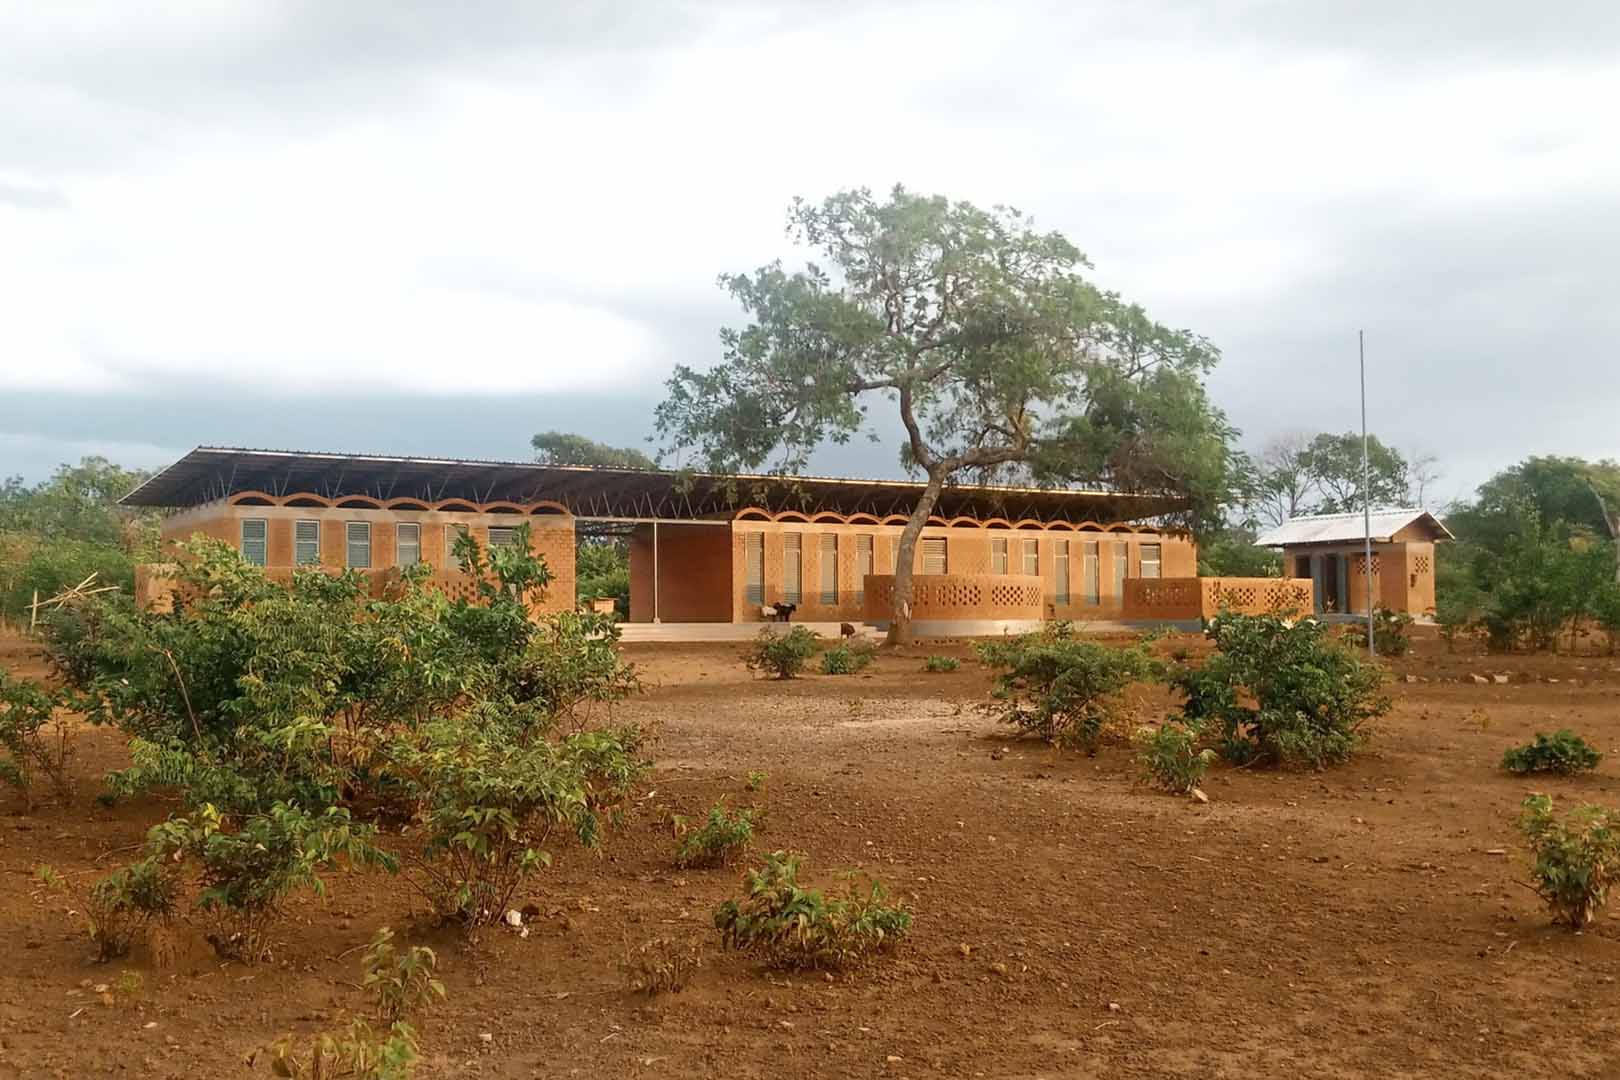 School built in a rural area